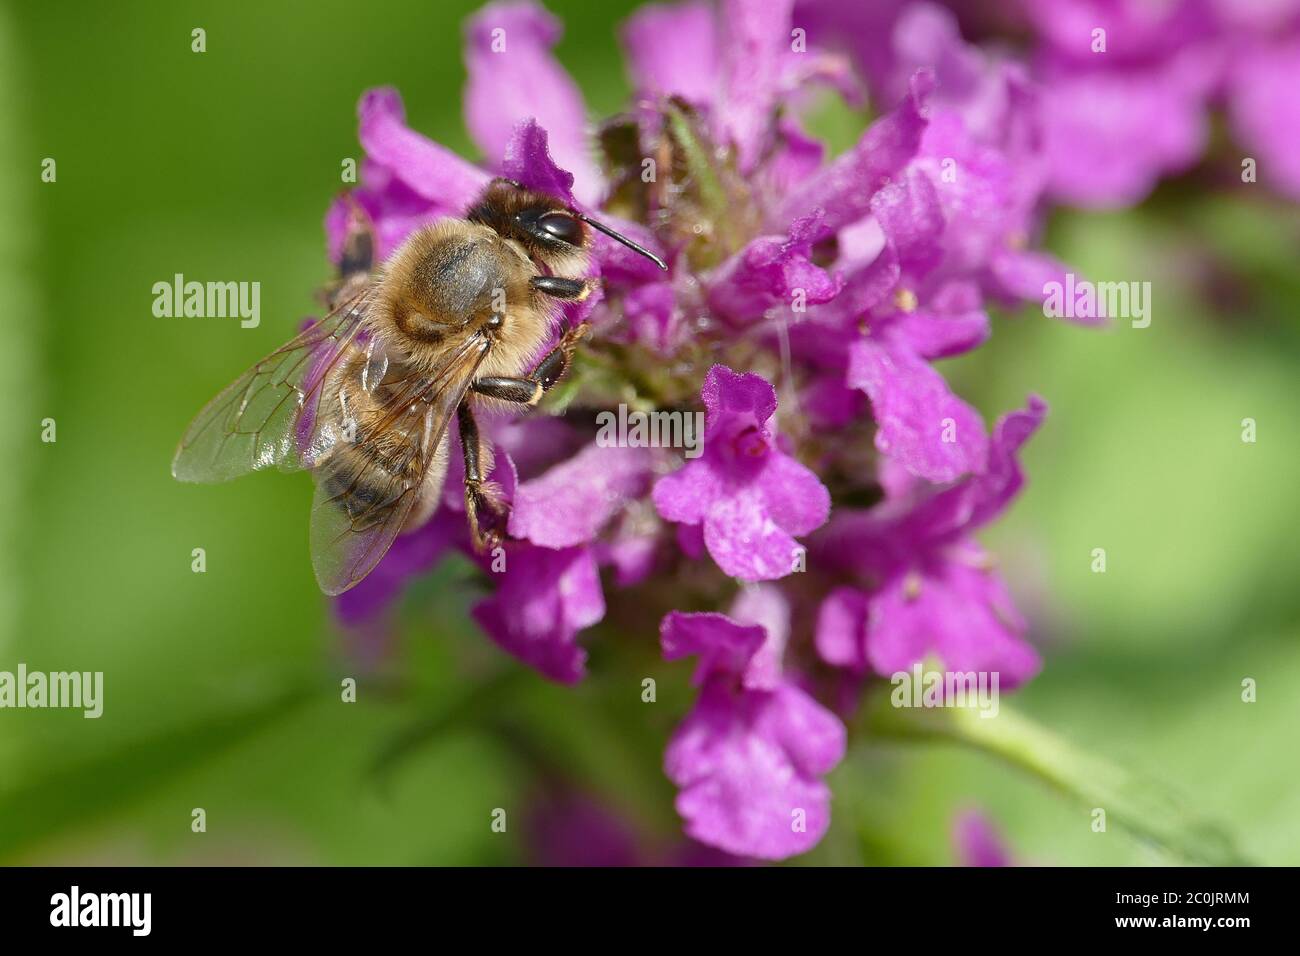 Honey bee sitting on a purple flower - macro shot Stock Photo